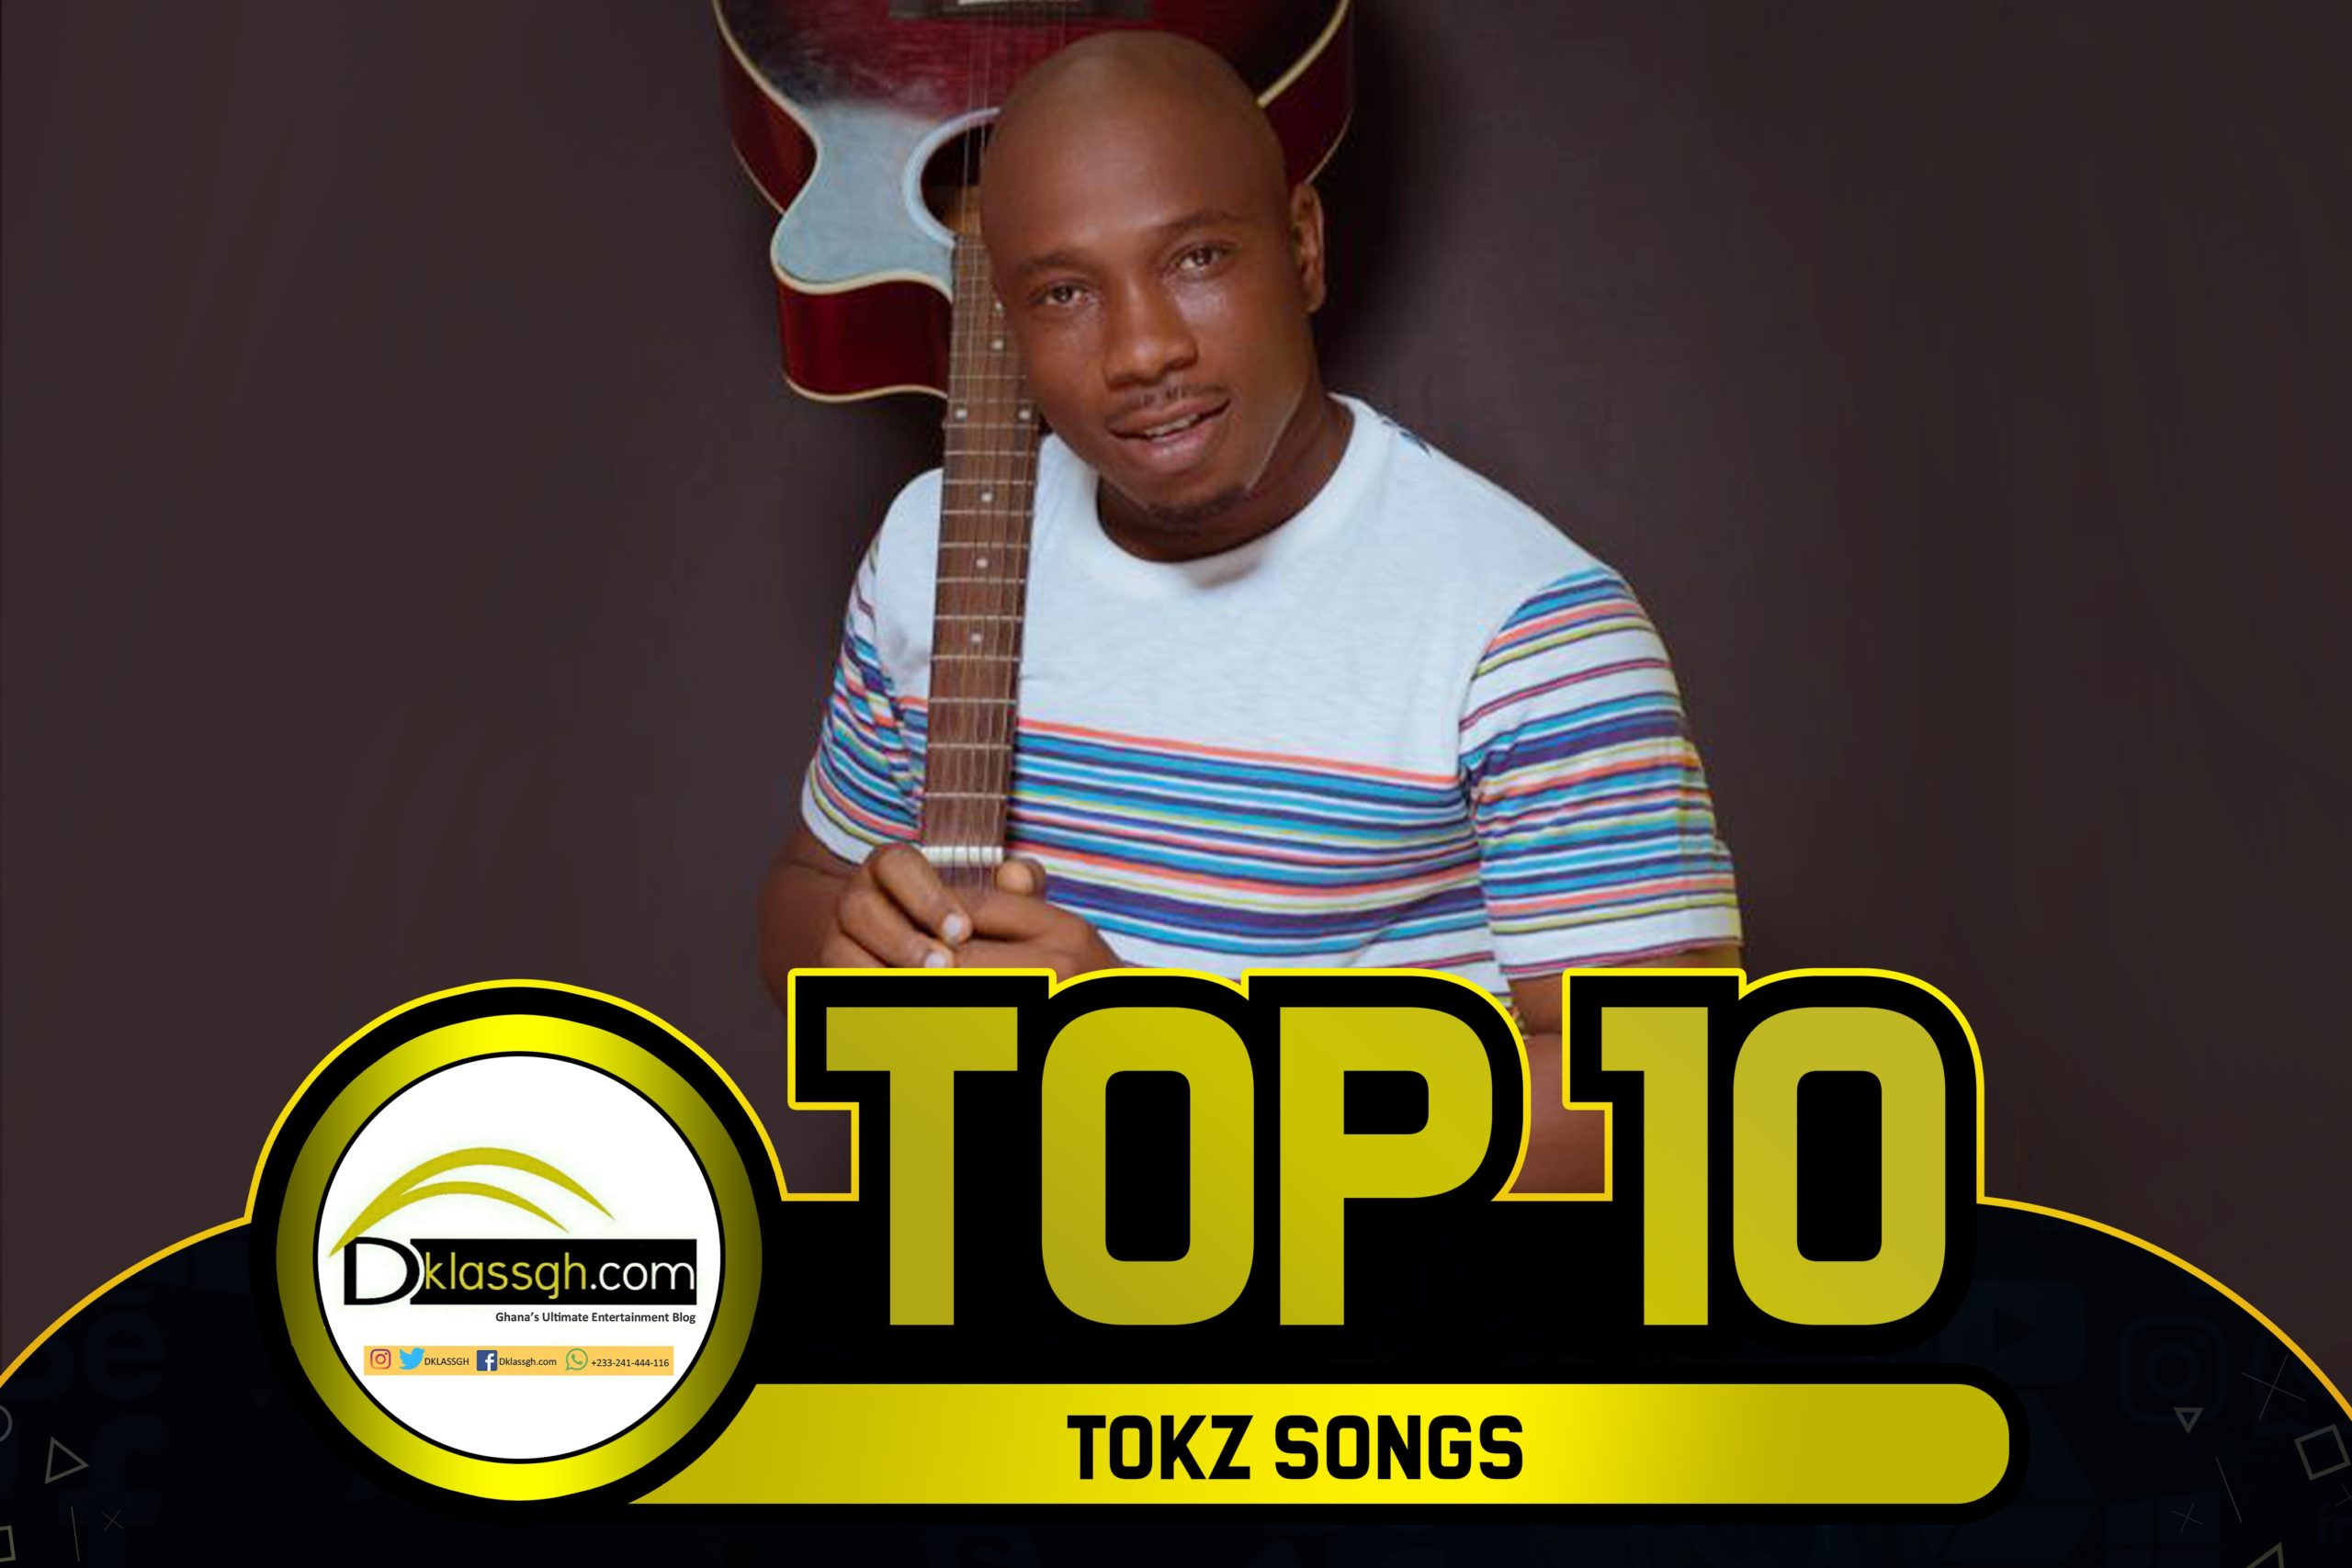 Top 10 Tokz Songs